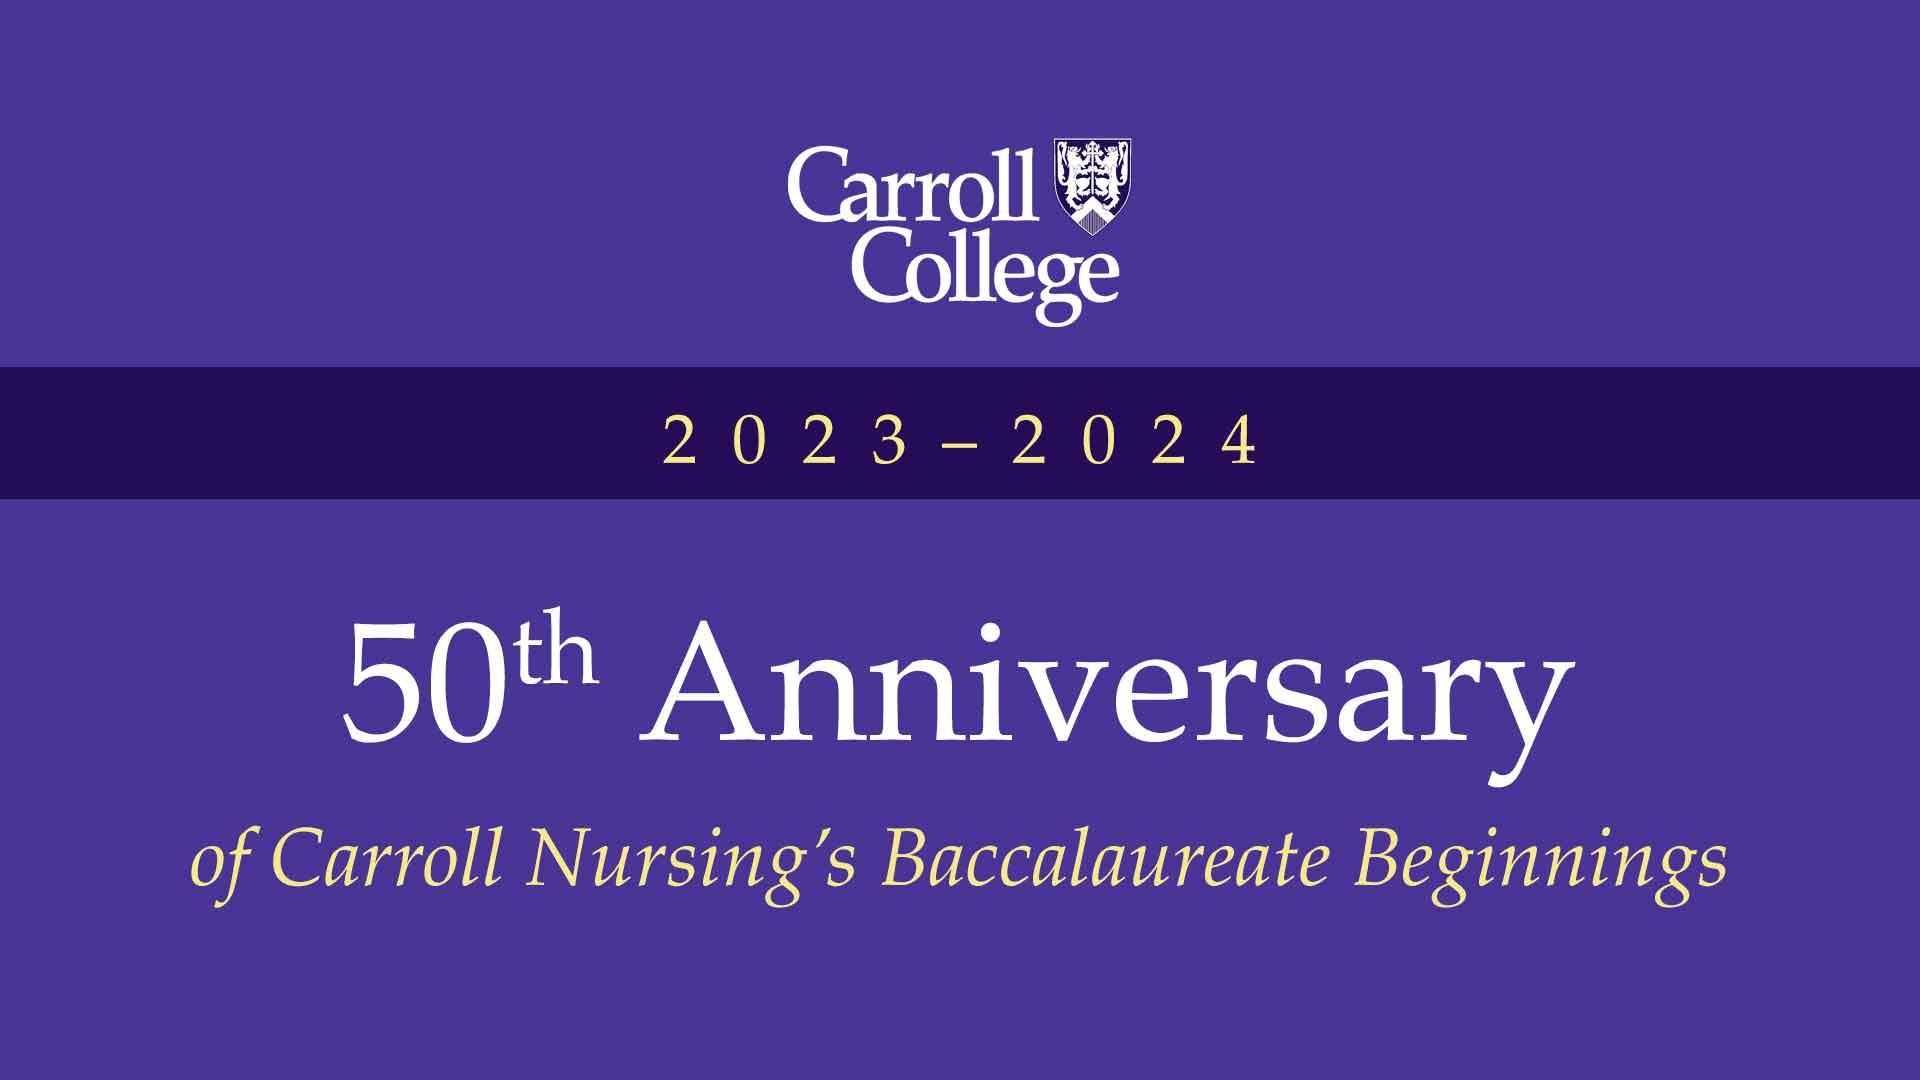 50th Anniversary of Carroll Nursing’s Baccalaureate Beginnings